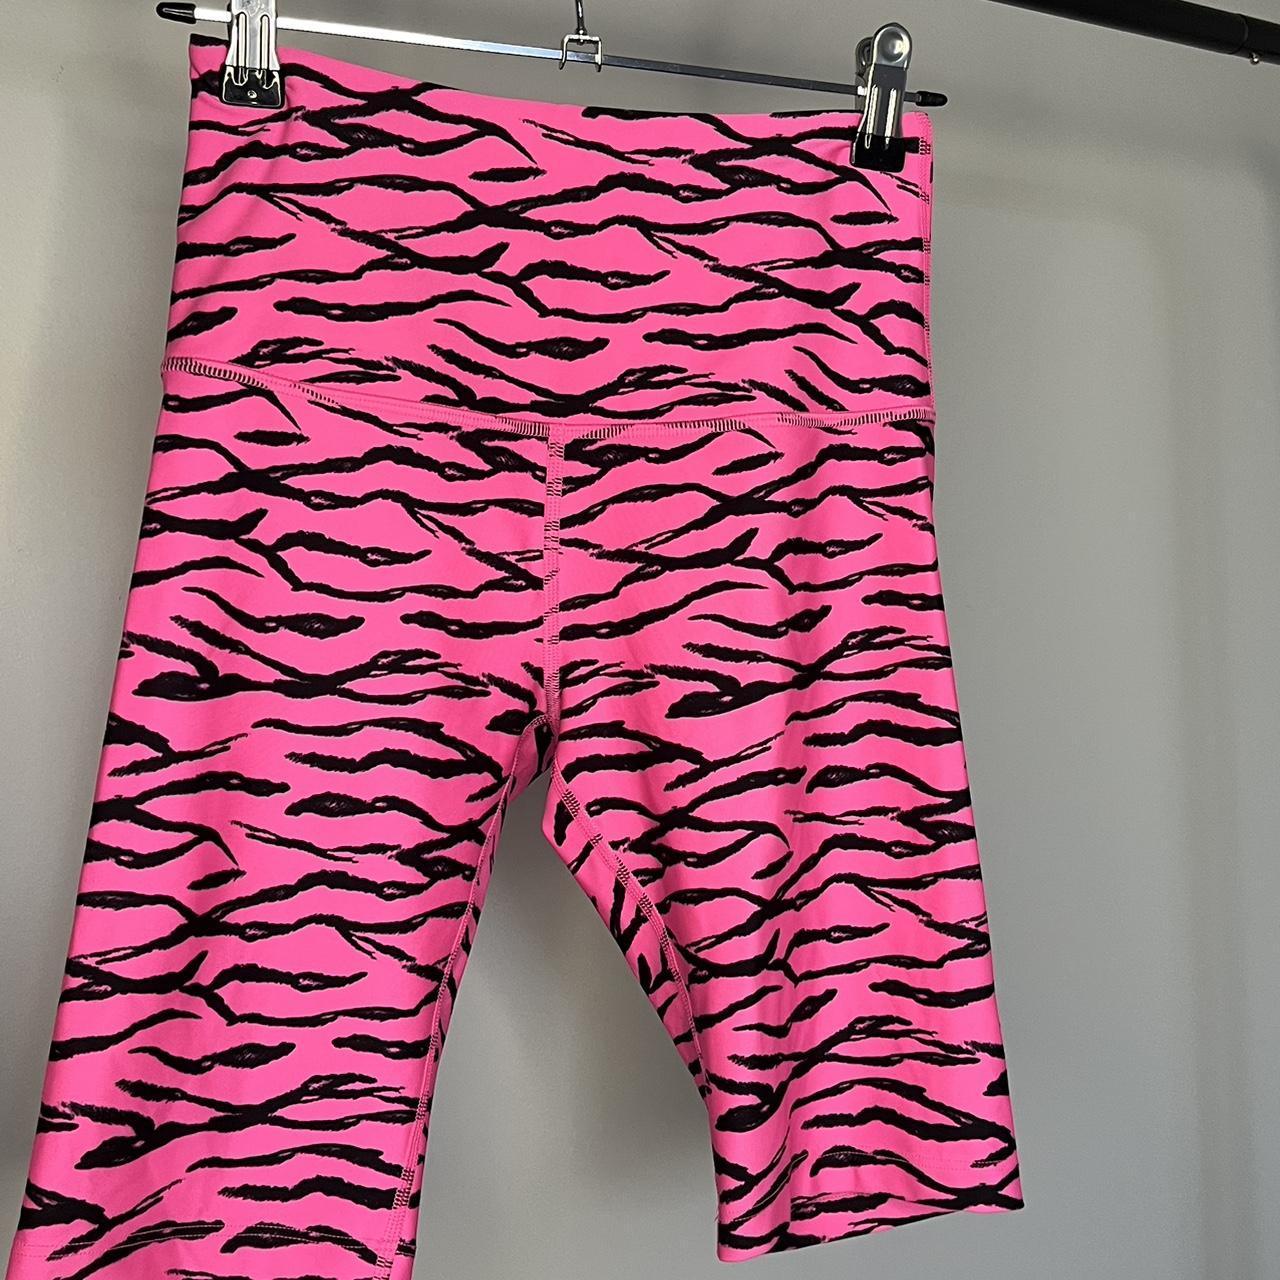 Lorna Jane XS Bike shorts Zebra print design - Depop